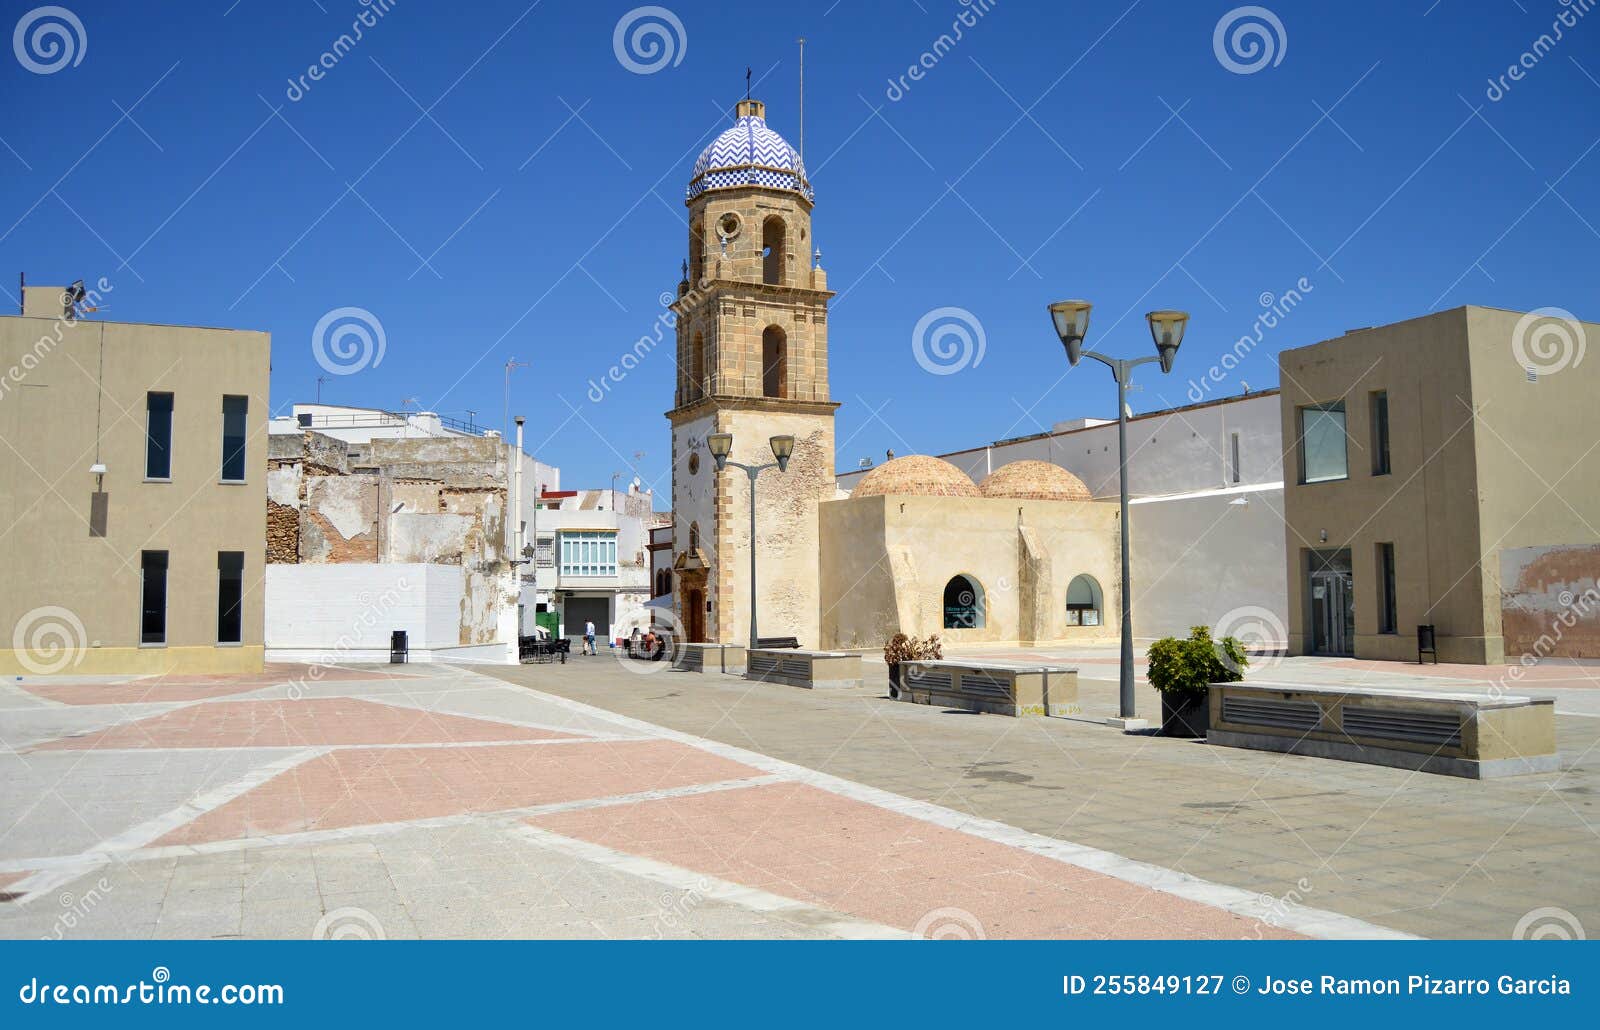 merced square and merced tower in rota, cadiz province, spain